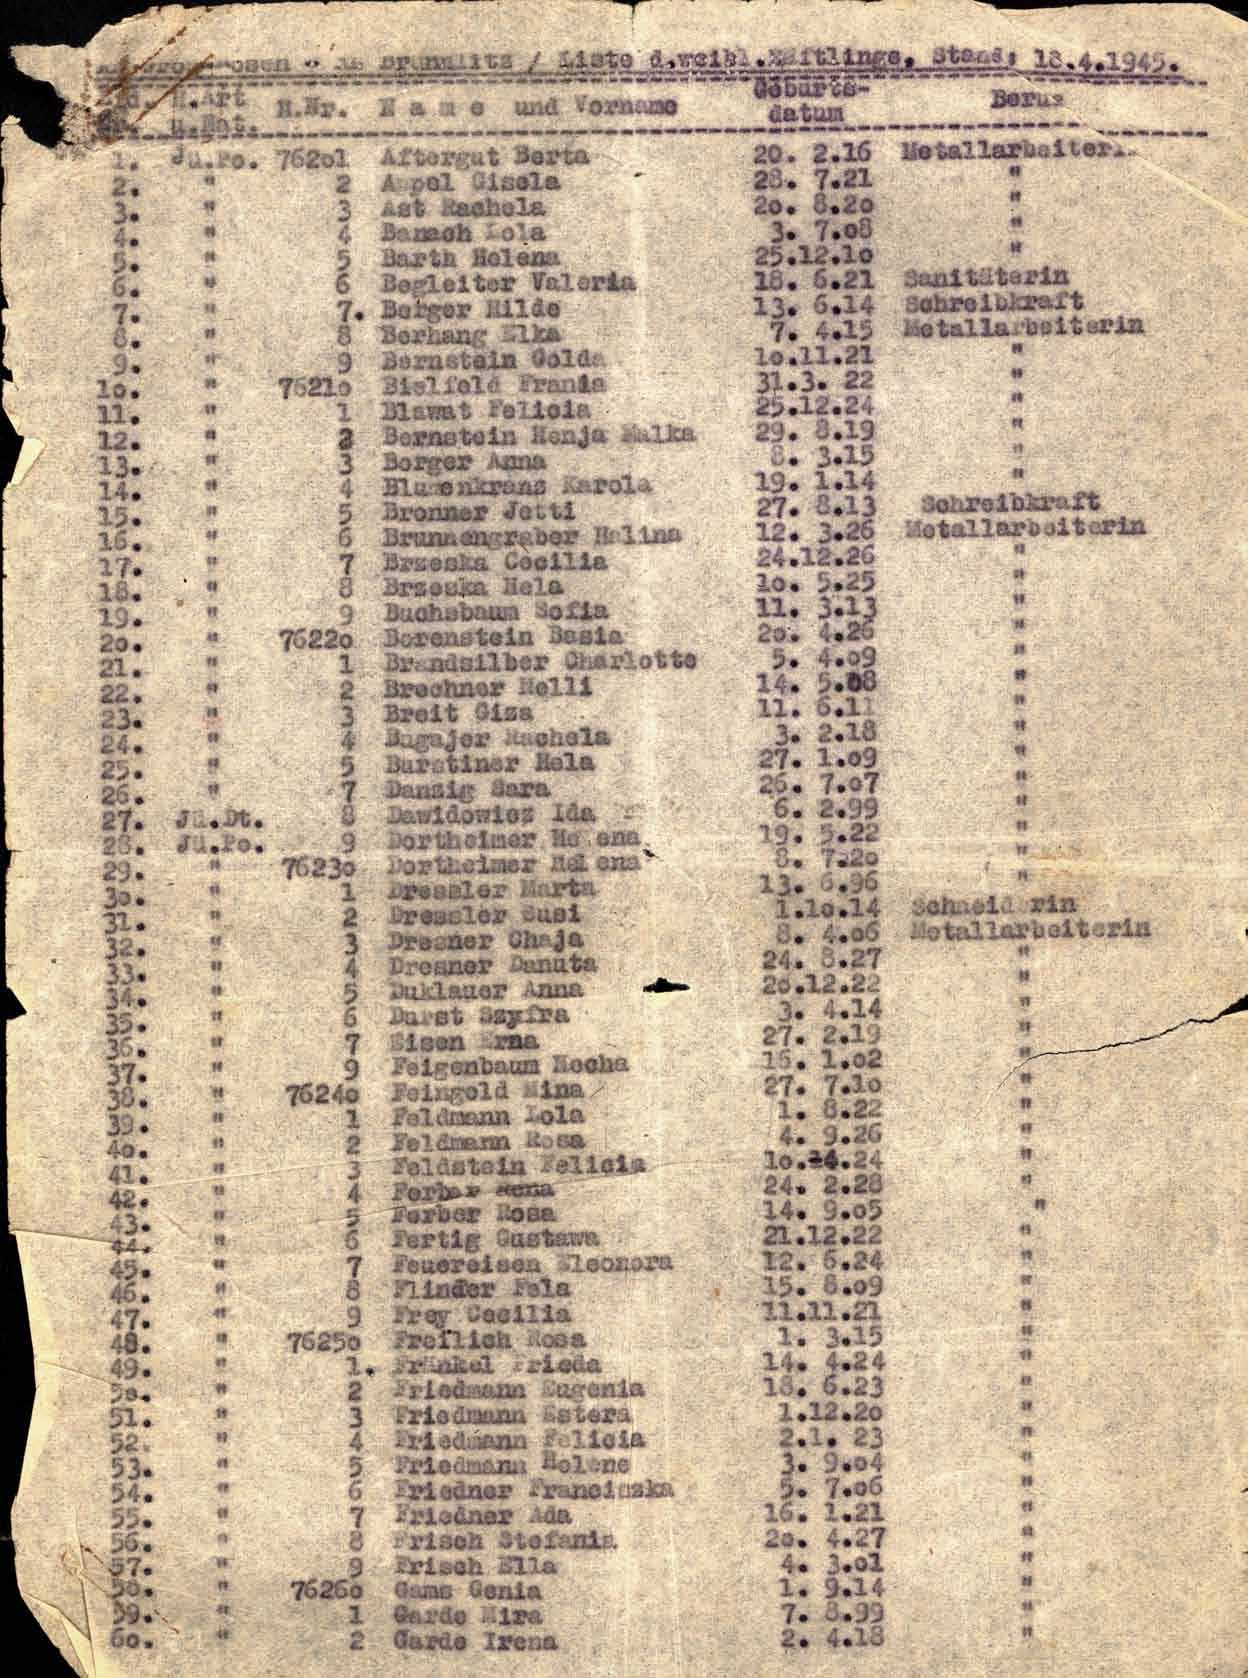 Schindler’s List. April 18, 1945